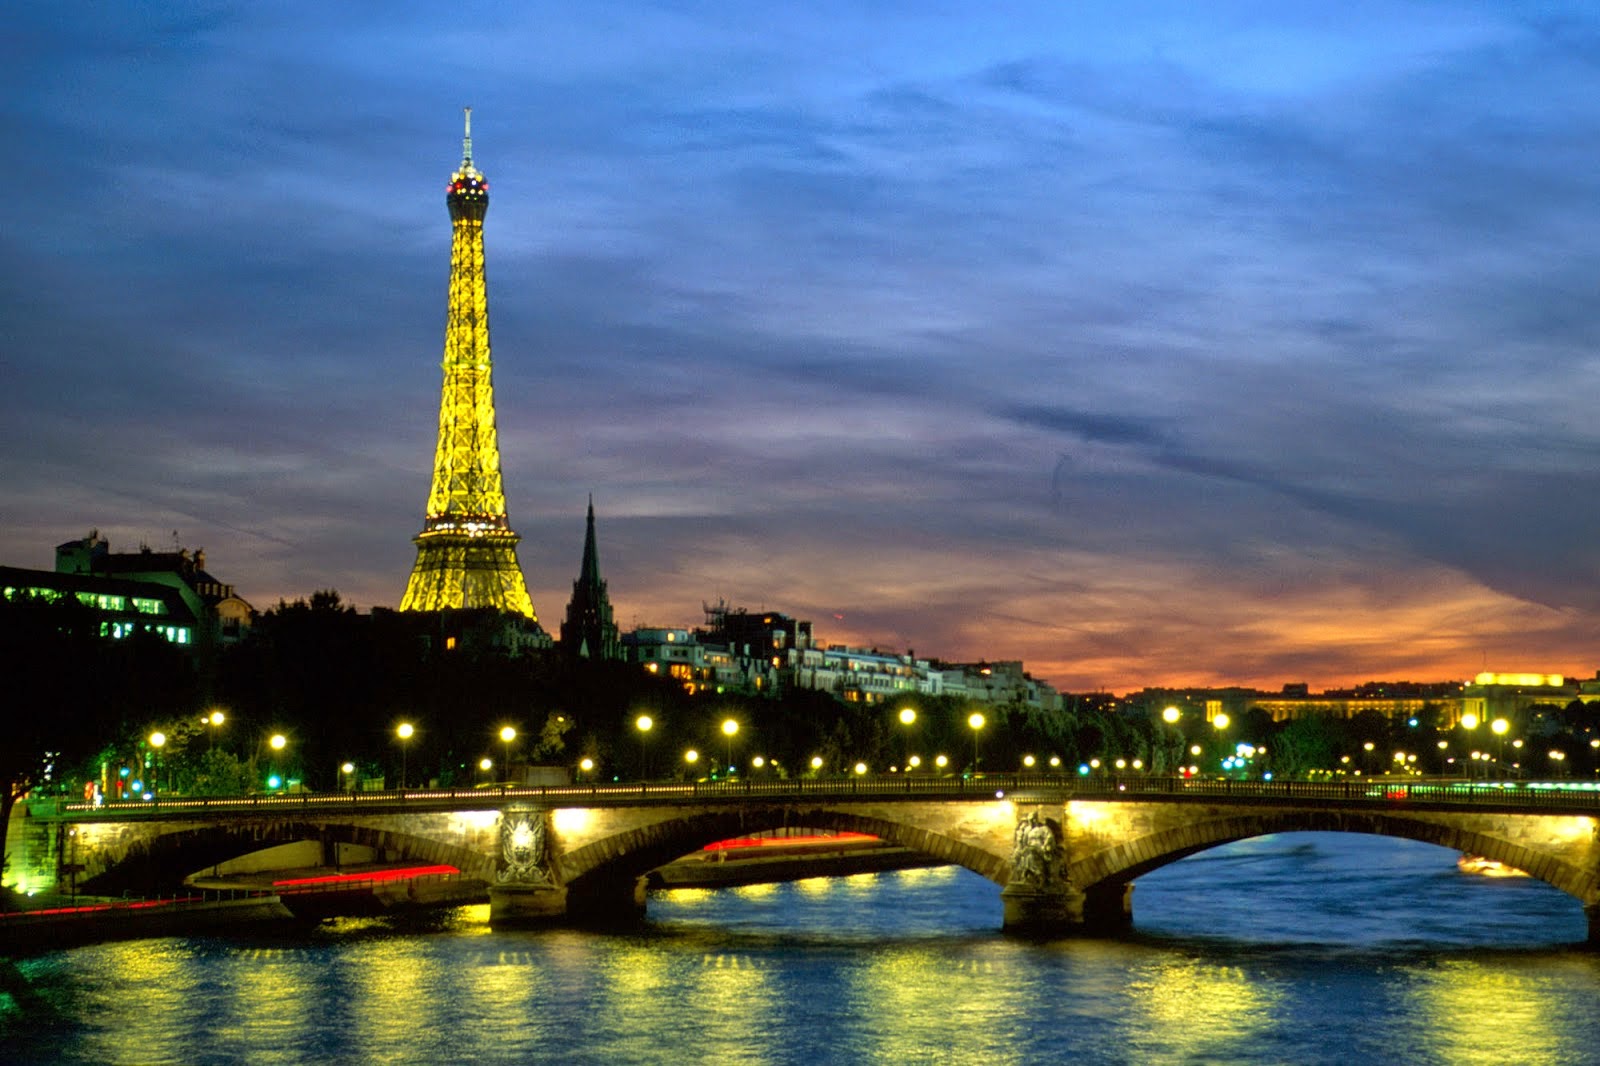 Foto Pemandangan Indah Menara Eiffel Prancis